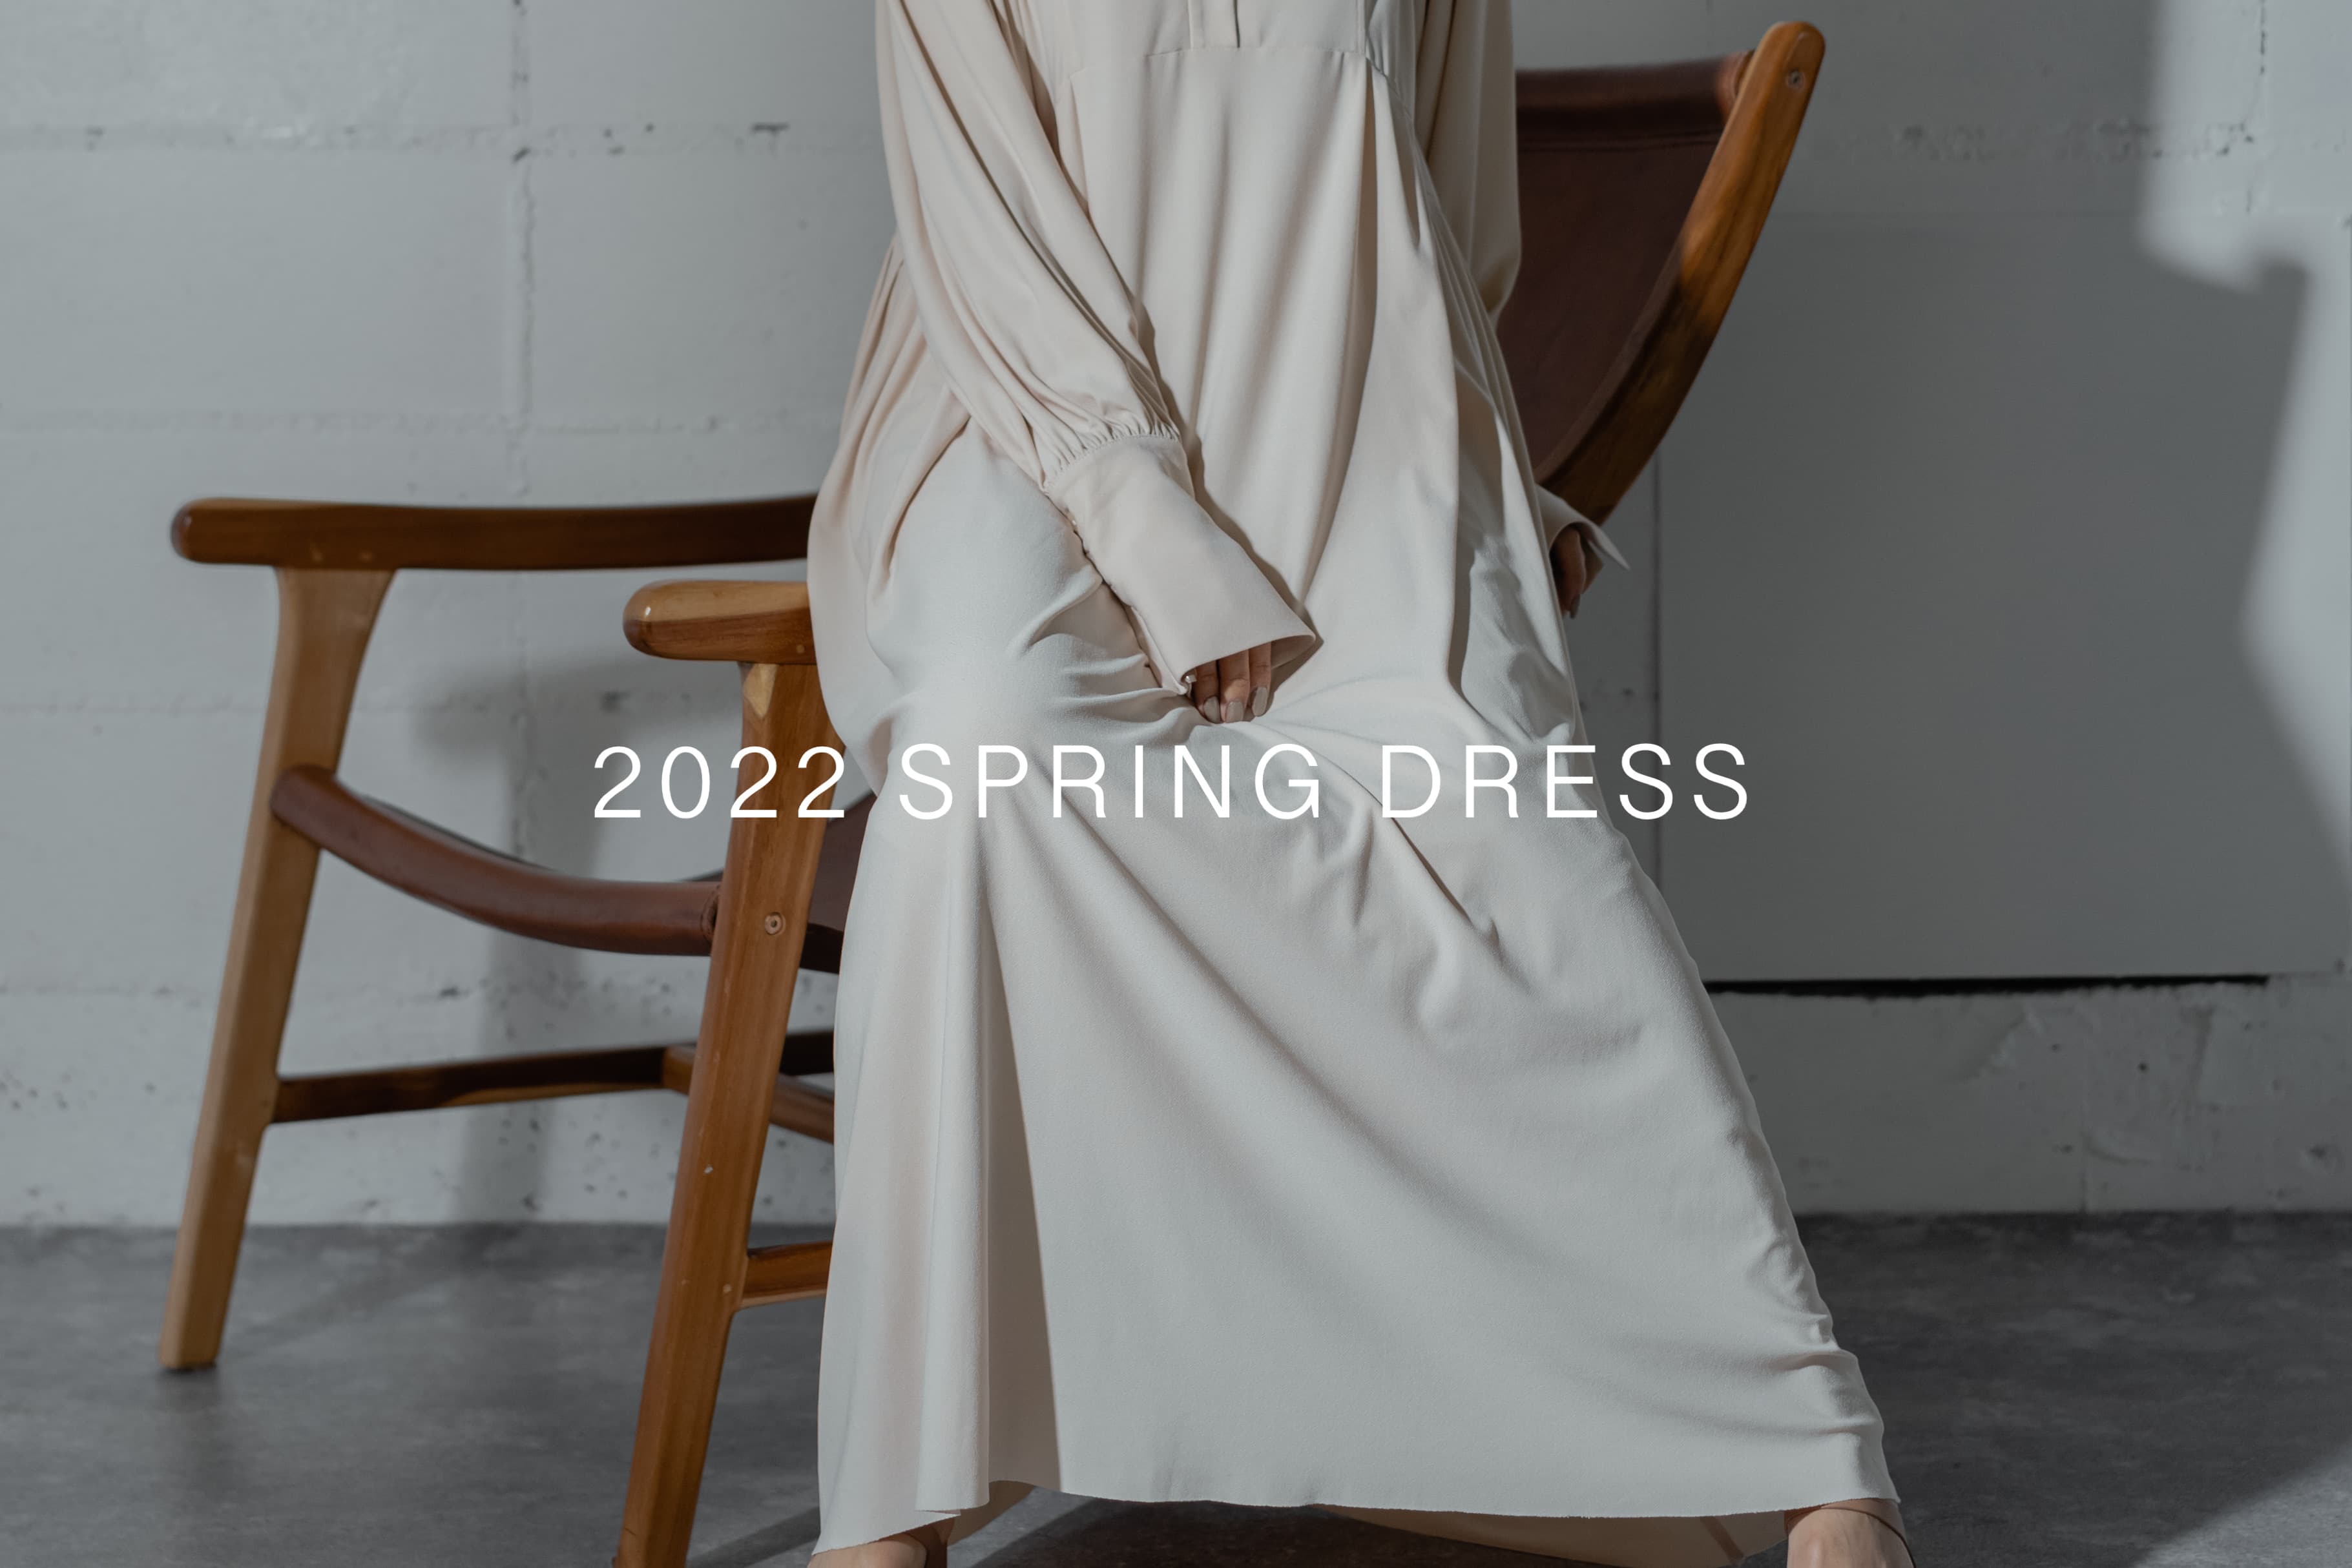 2022 SPRING DRESS